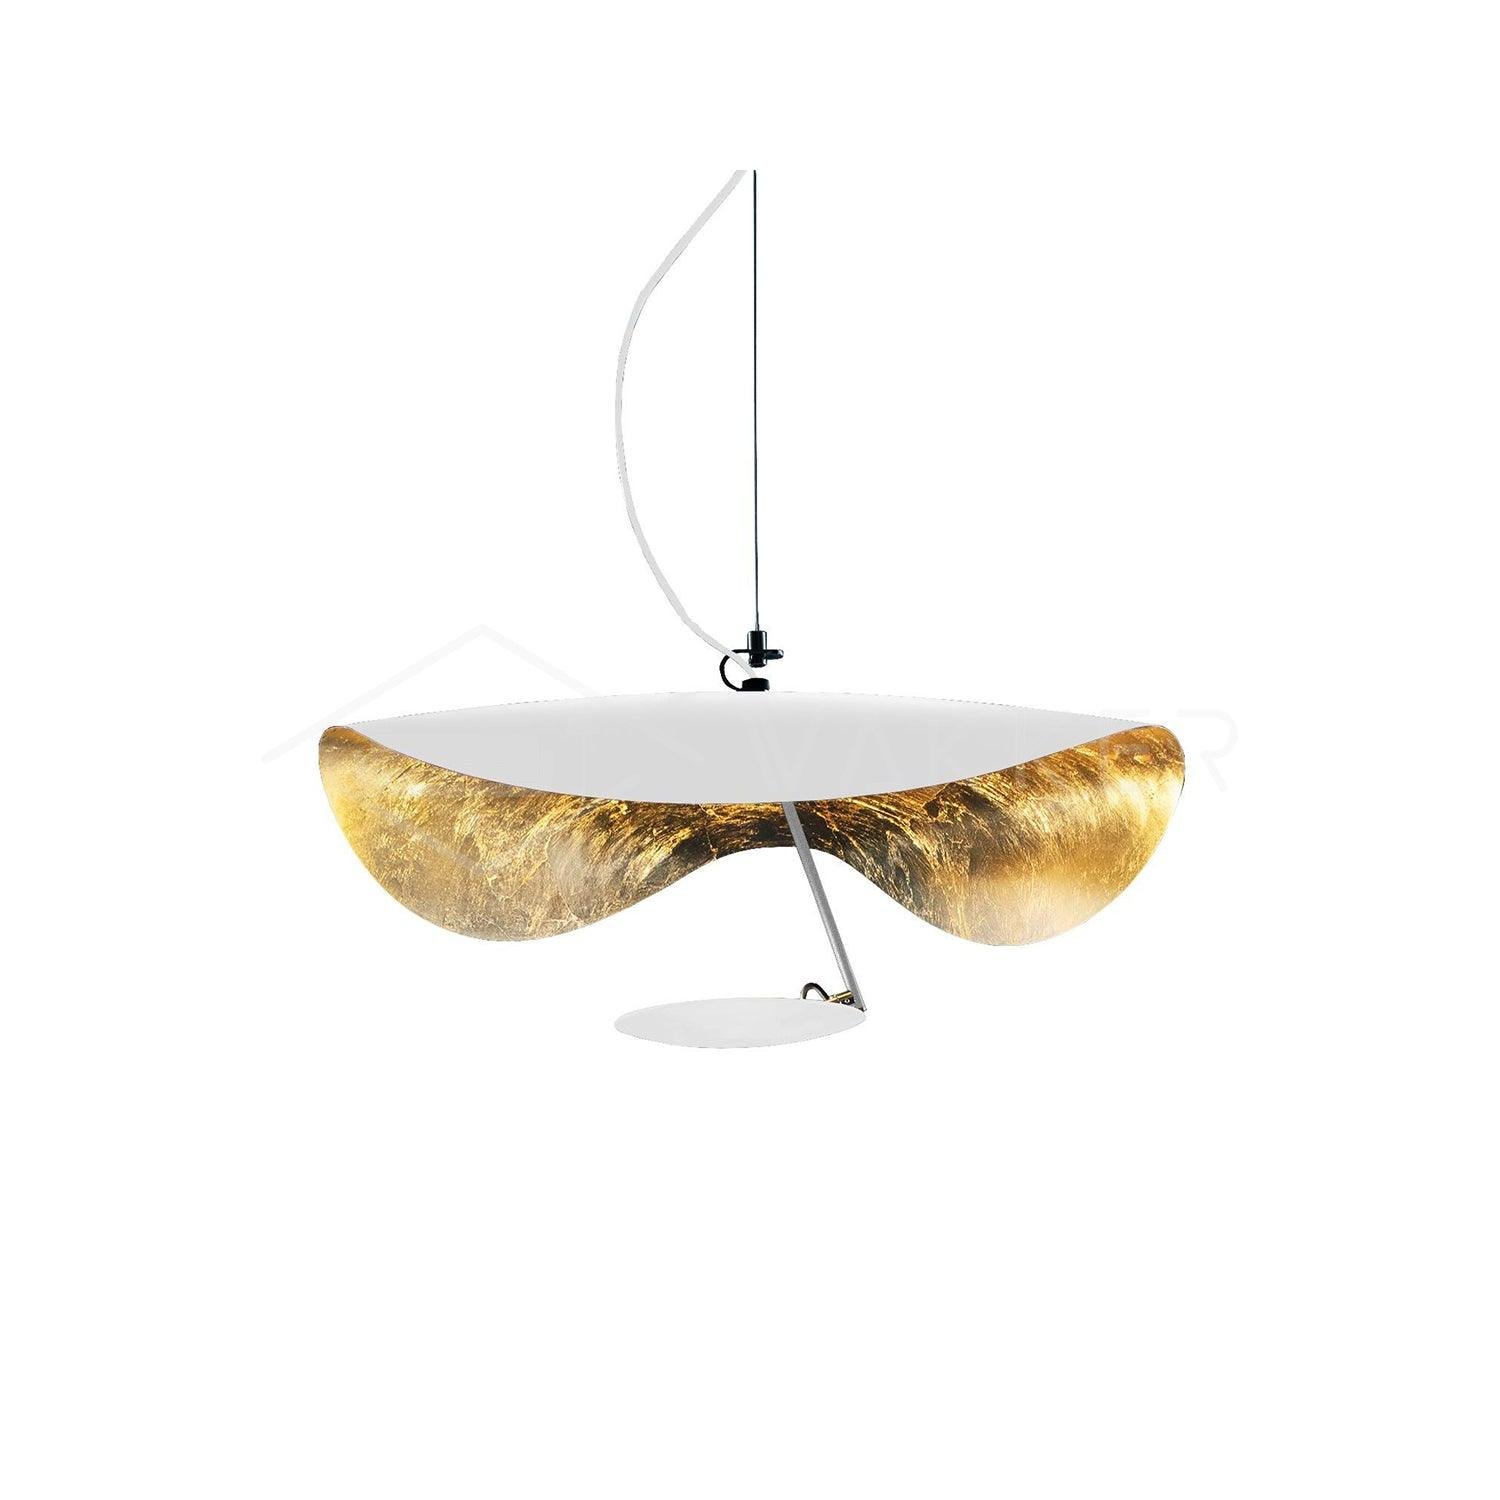 Lederam Manta Pendant Light ∅ 15.7″ x H 10.6″ , Dia 40cm x H 27cm , White+Gold , Cool white